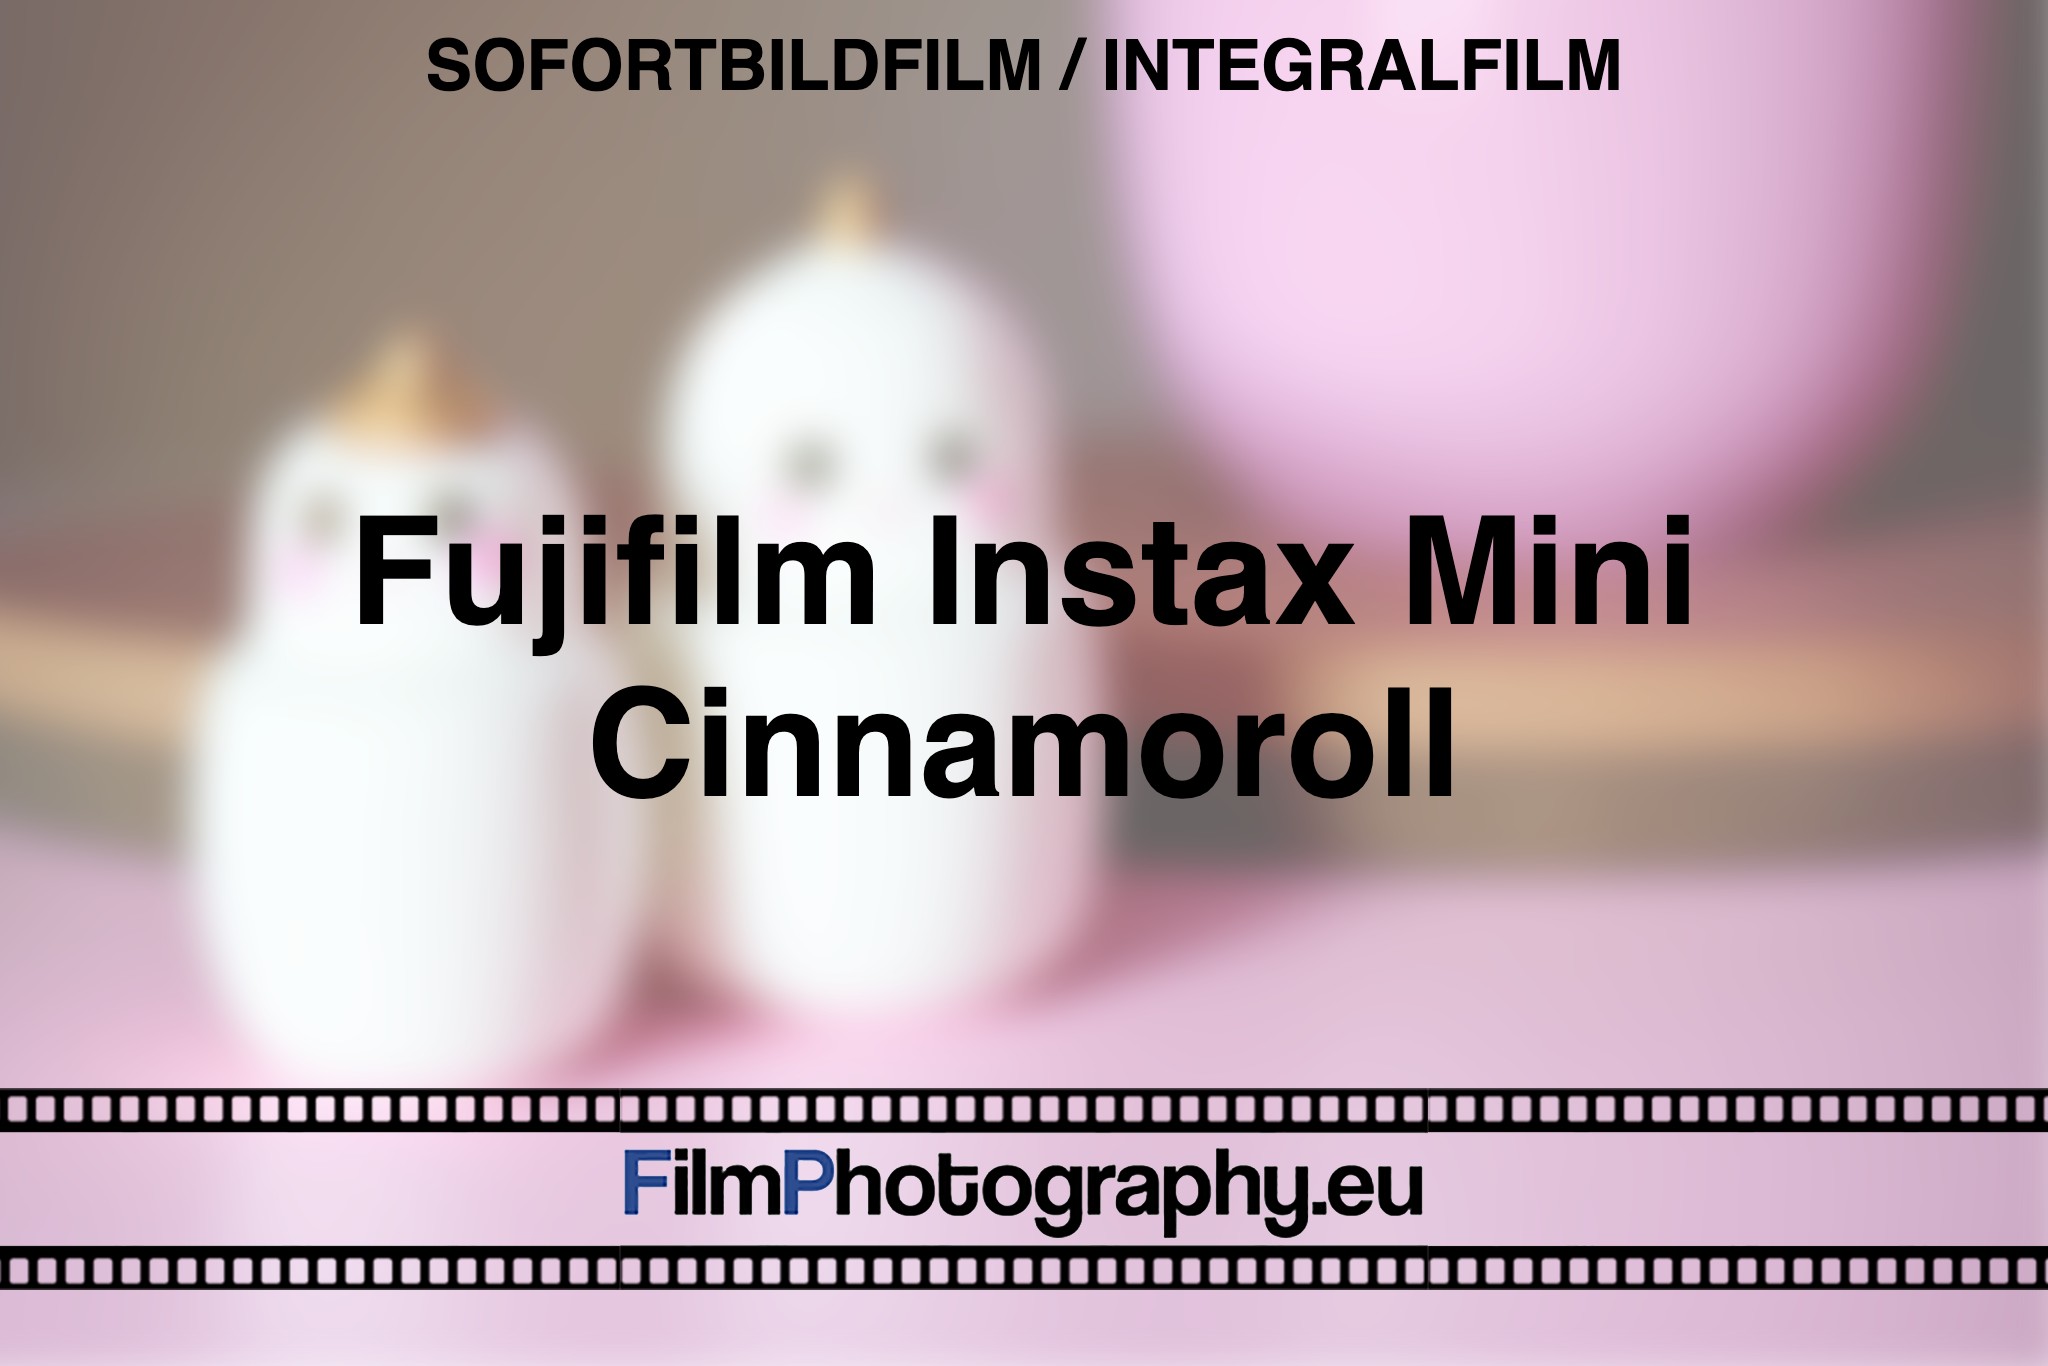 fujifilm-instax-mini-cinnamoroll-sofortbildfilm-integralfilm-fp-bnv